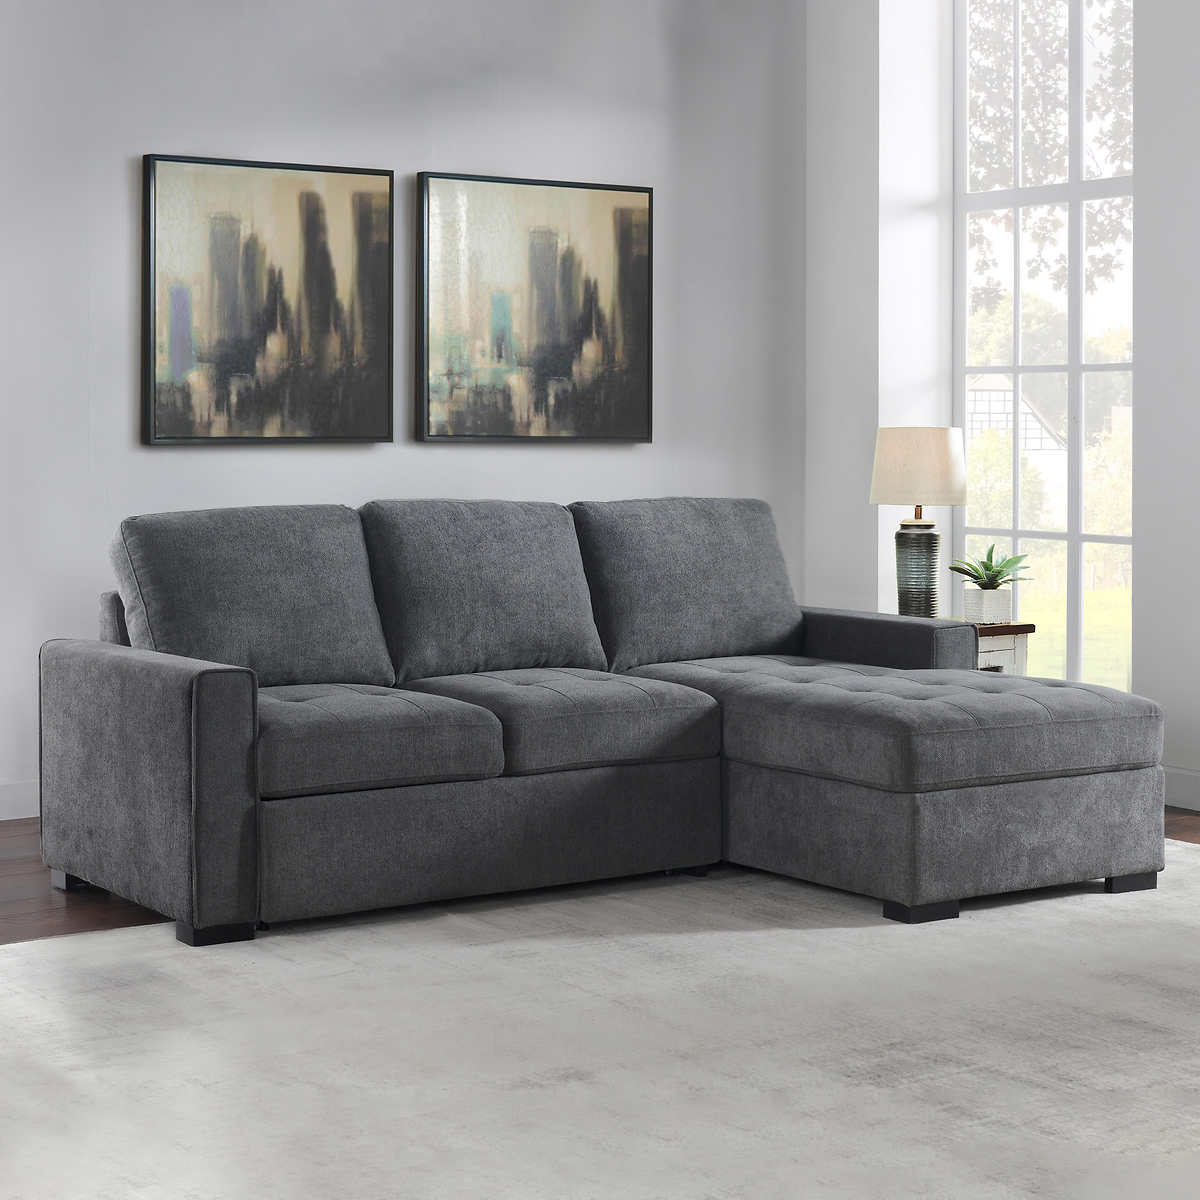 Kendale Sleeper Sofa With Storage, Sofa Lounge Sleeper